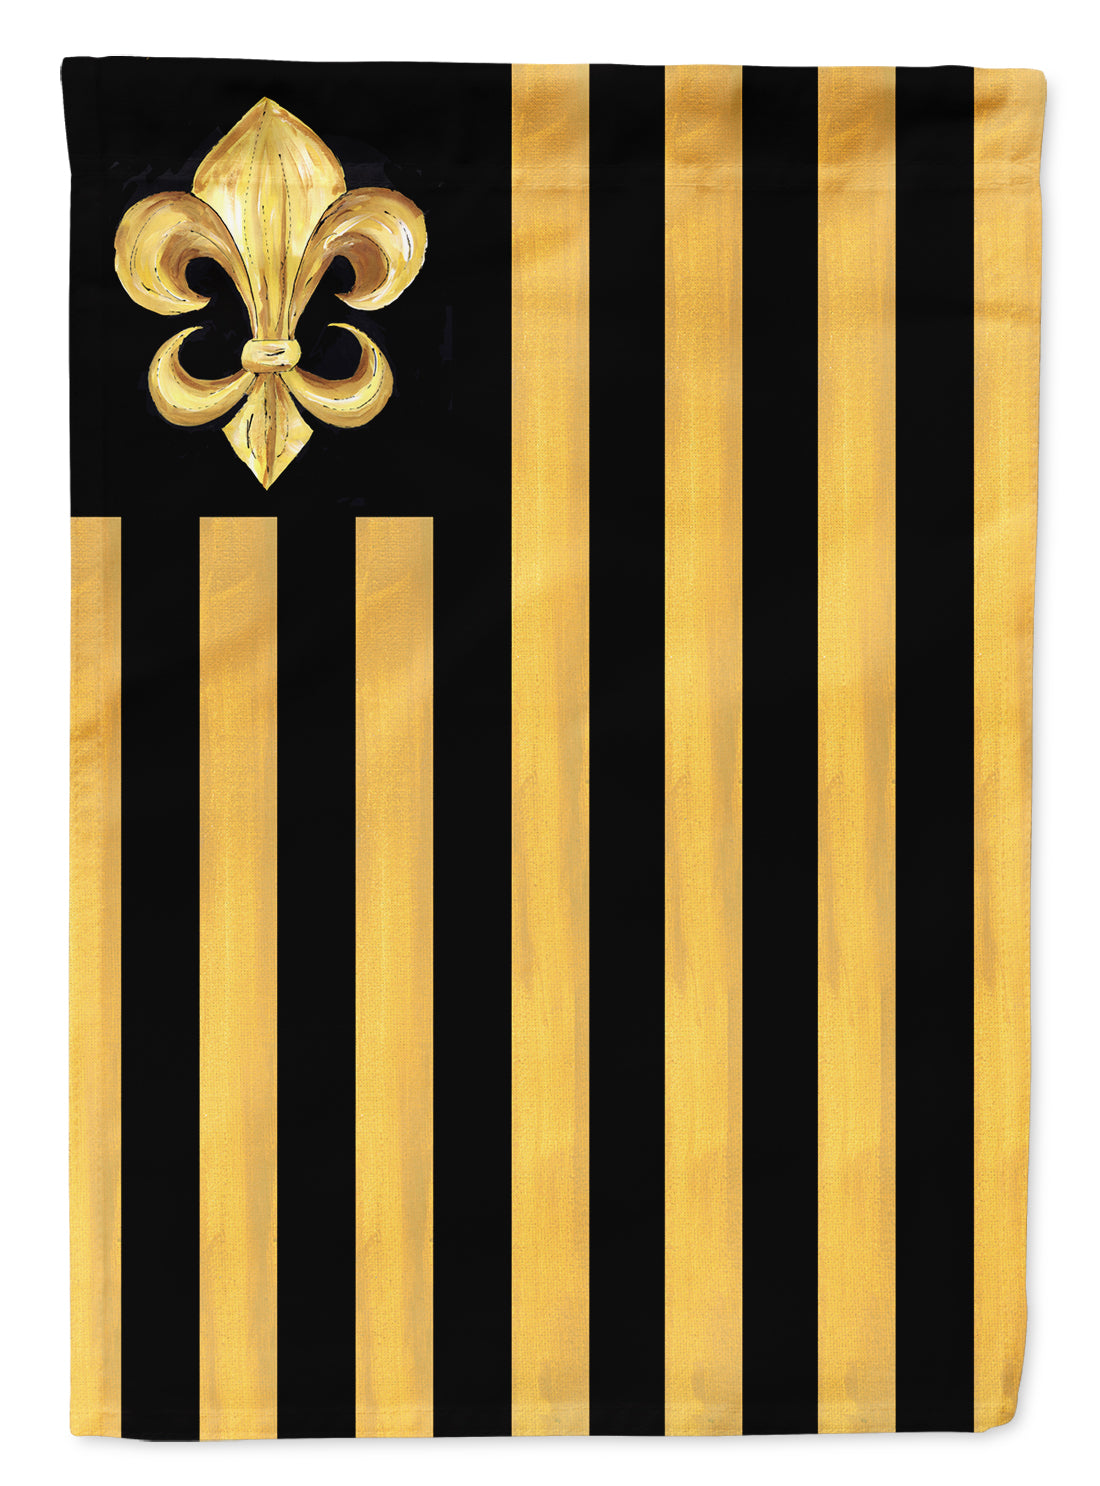 Black and Gold Fleur de lis Nation Flag Garden Size.